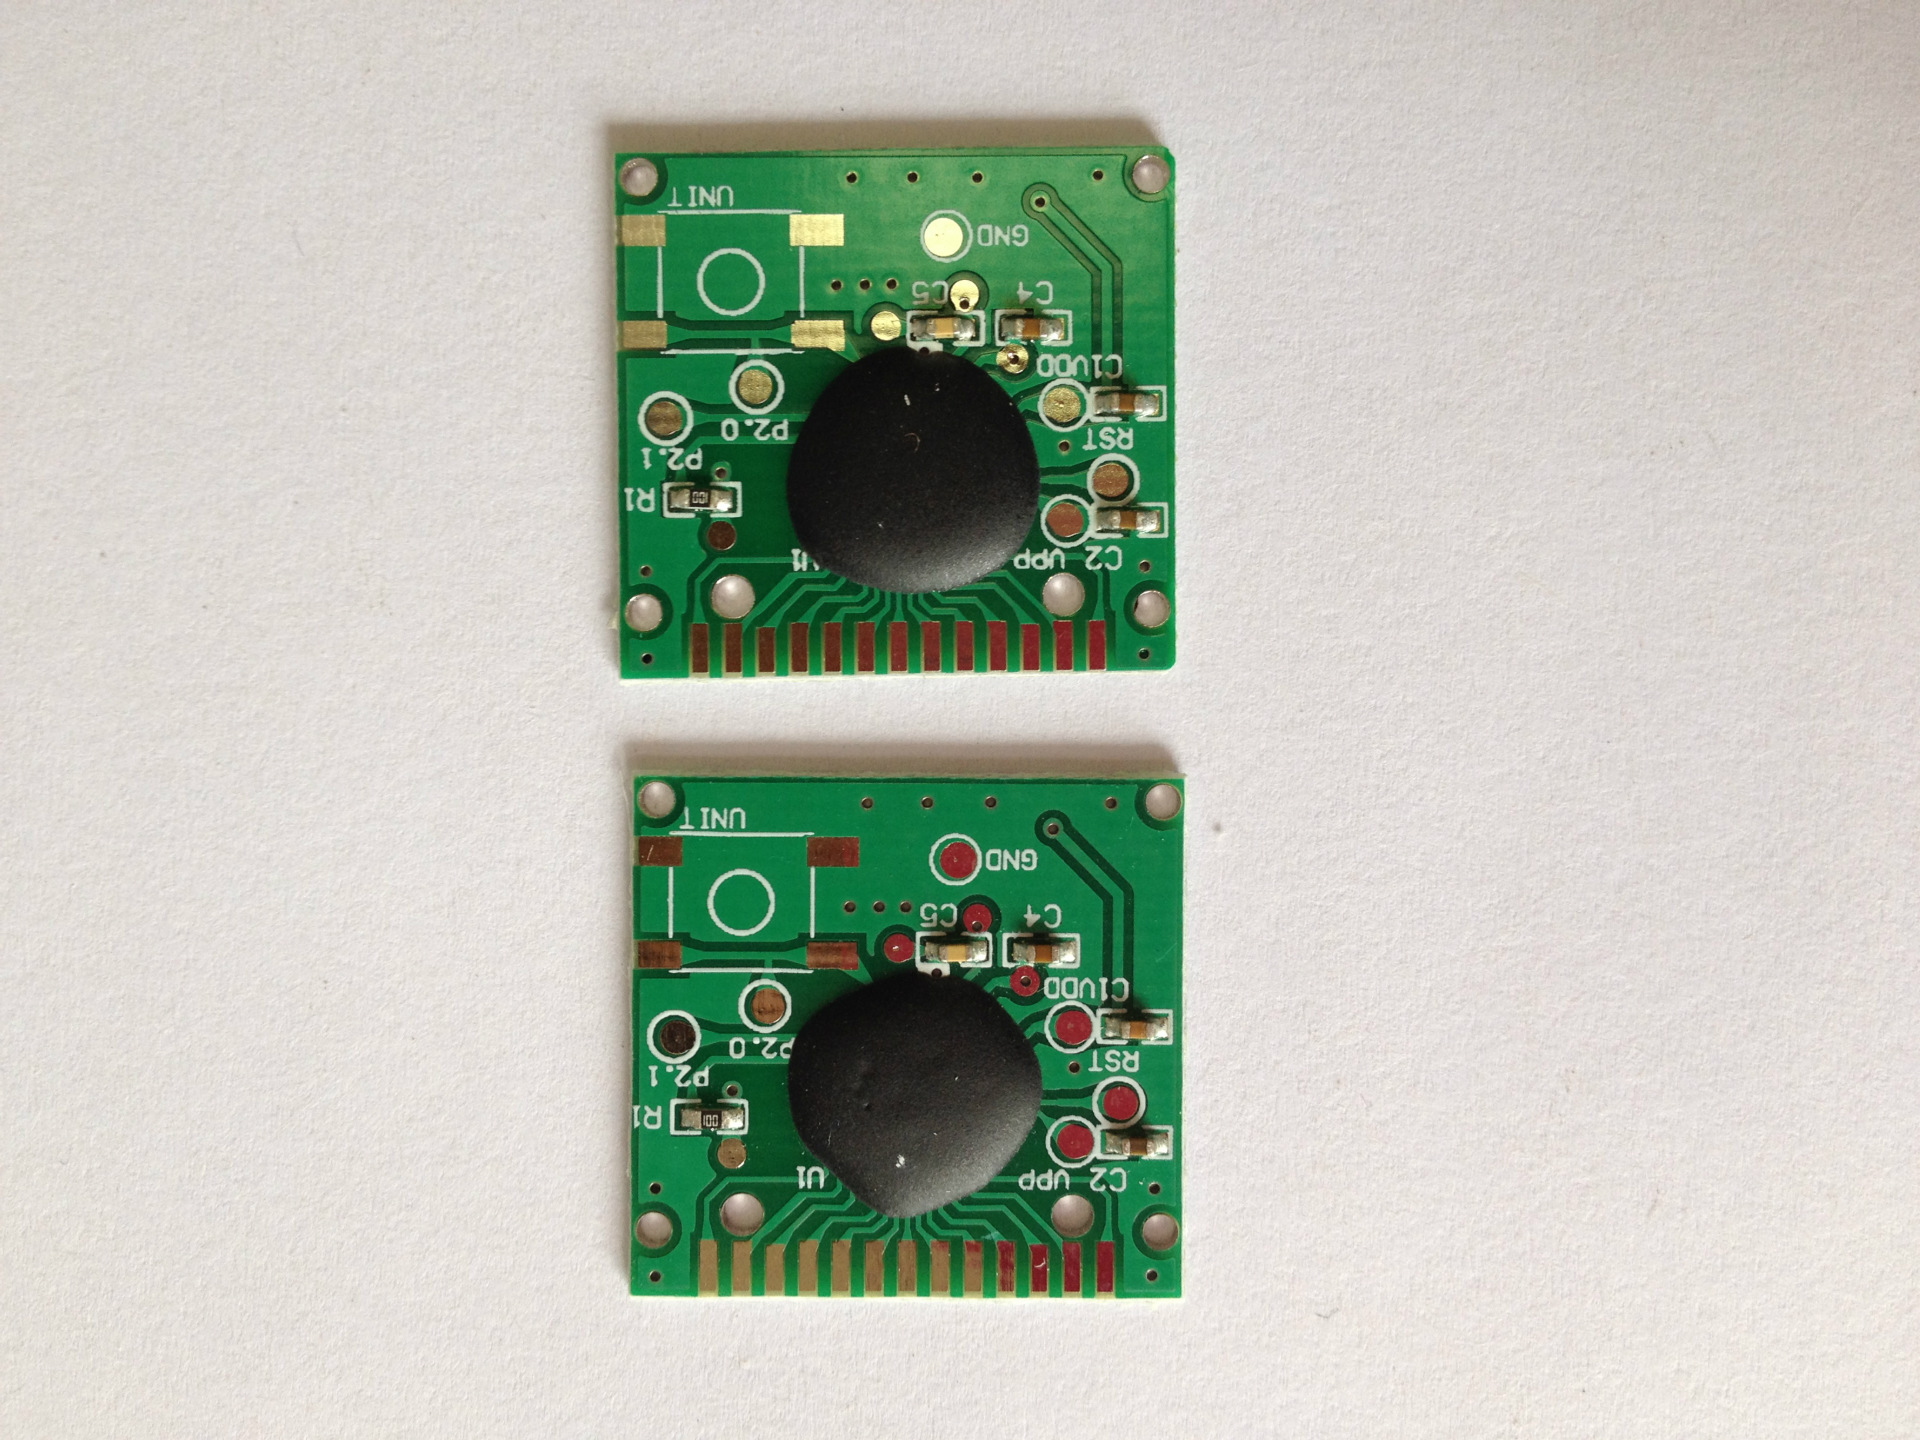 LCD人体秤方案供应电路板和芯片可开发体脂体重秤设计